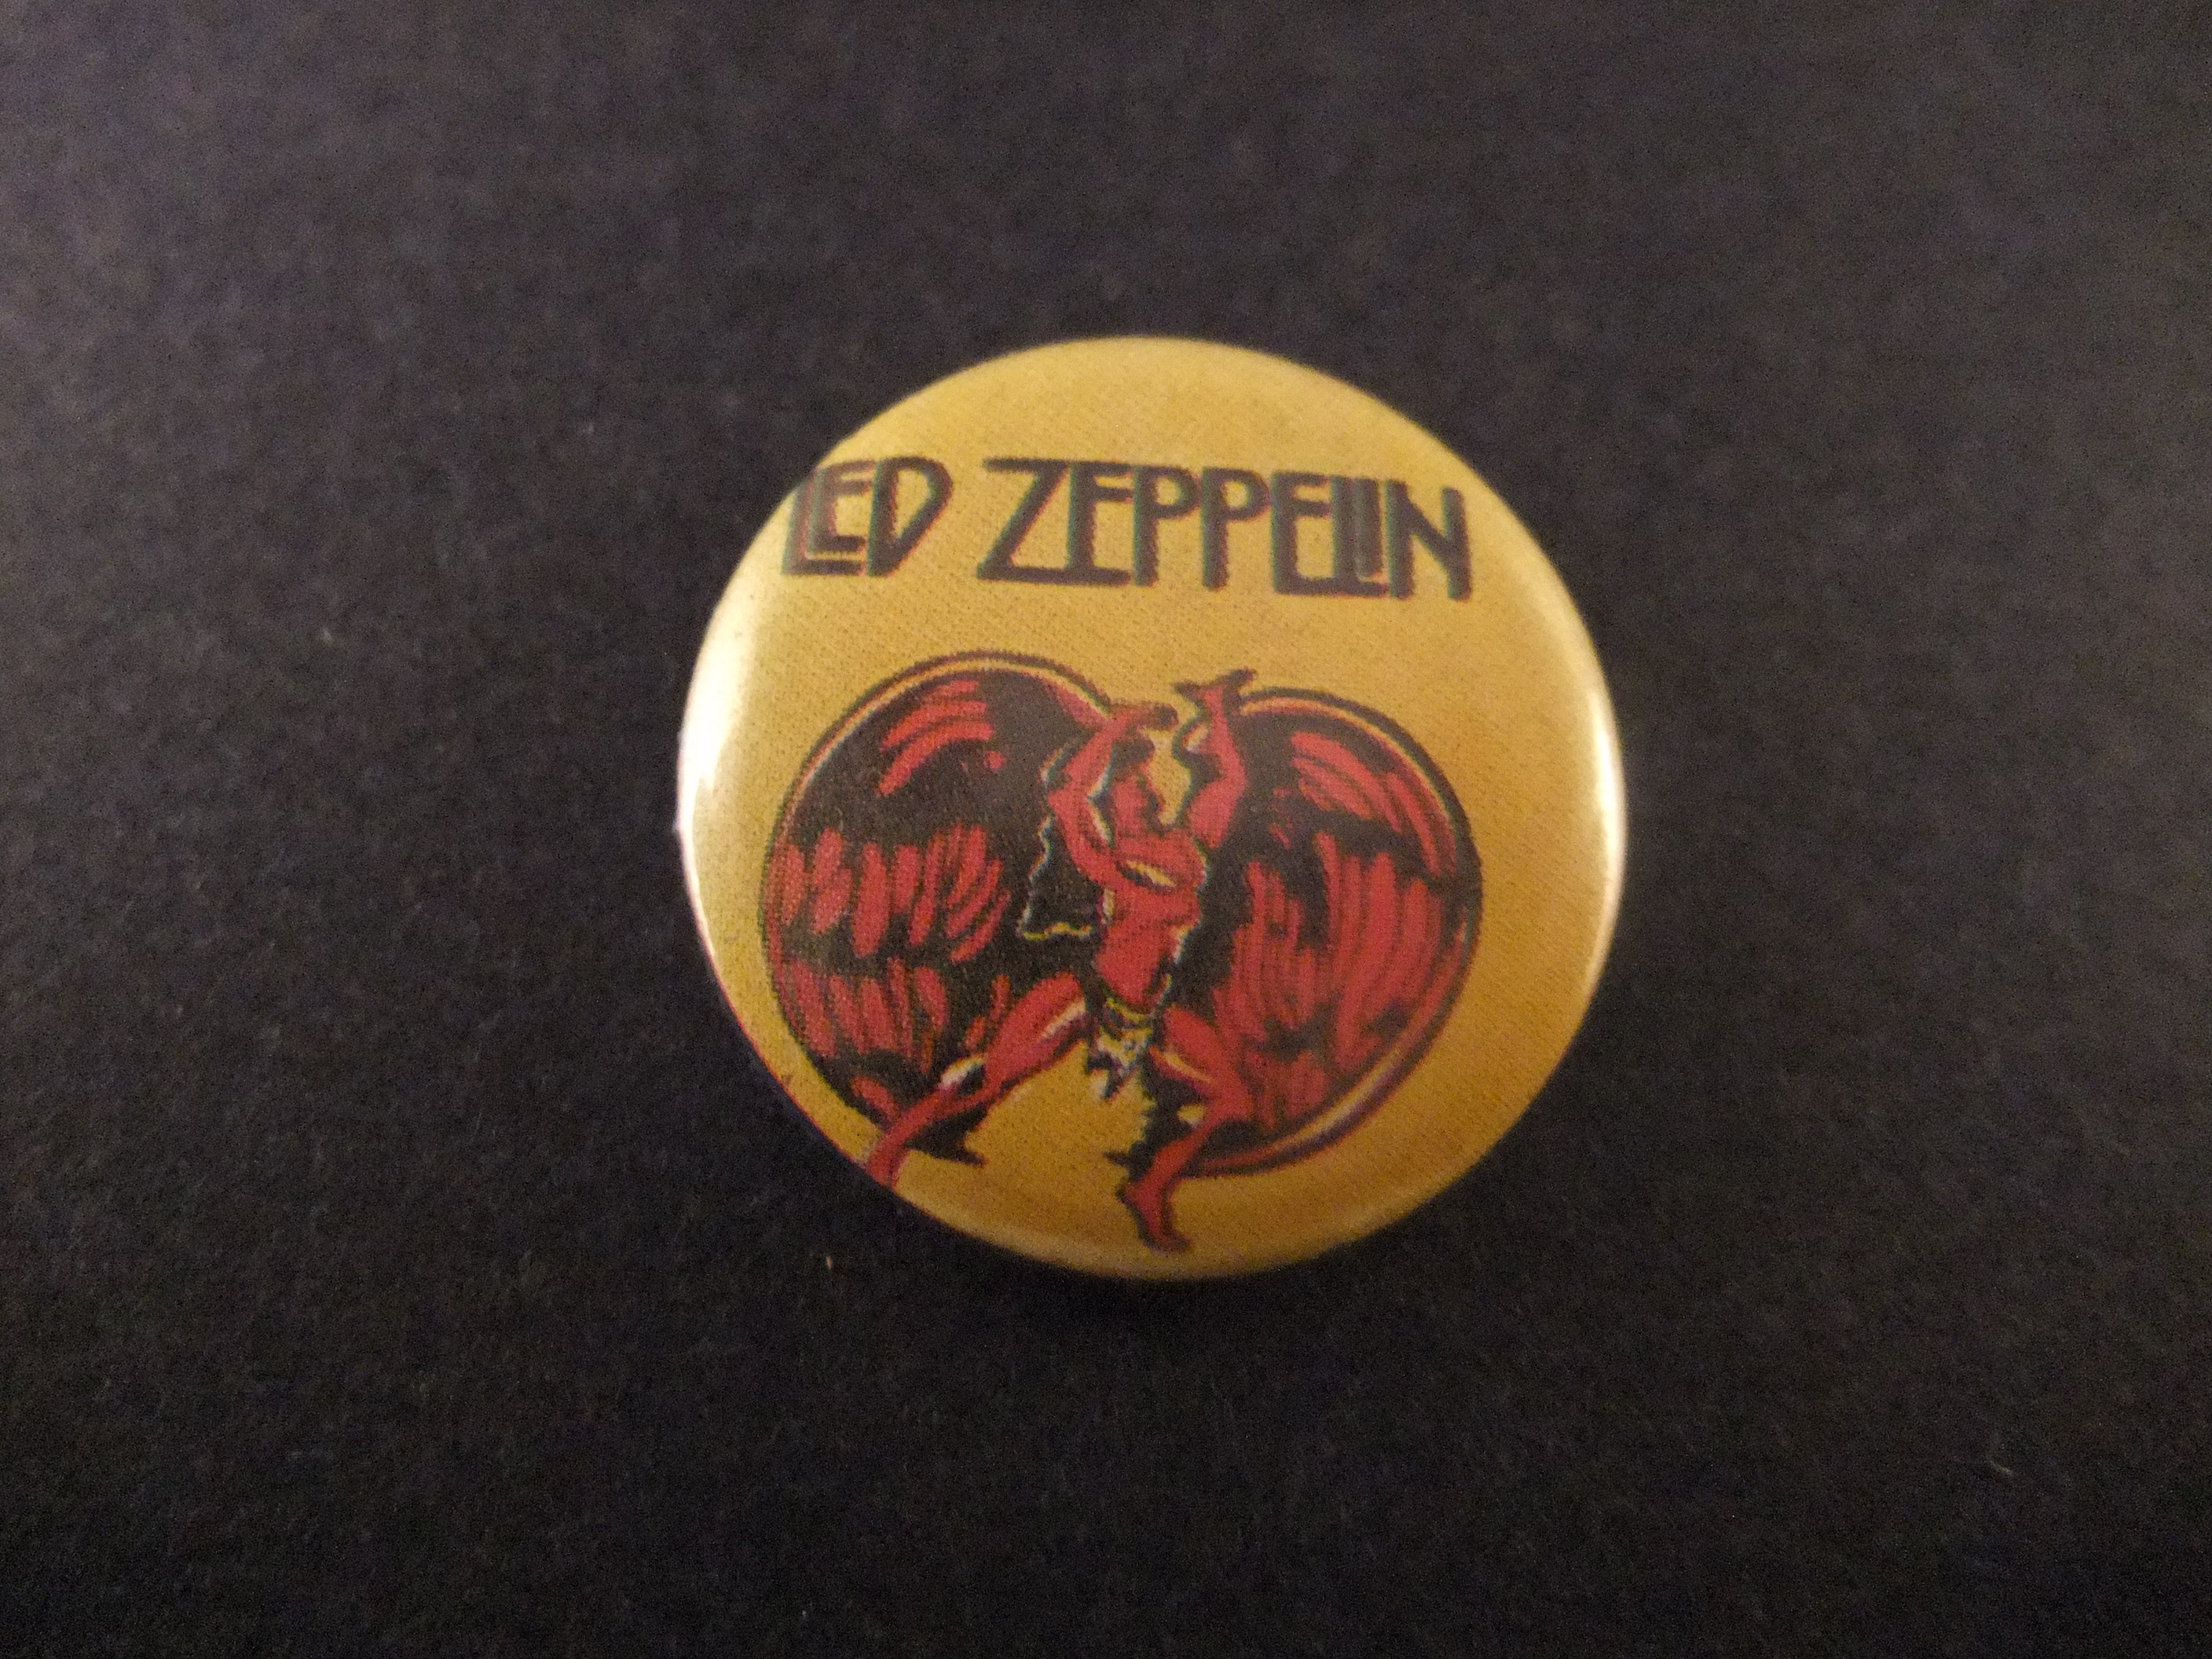 Led Zeppelin Engelse rockband opgericht door Jimmy Page